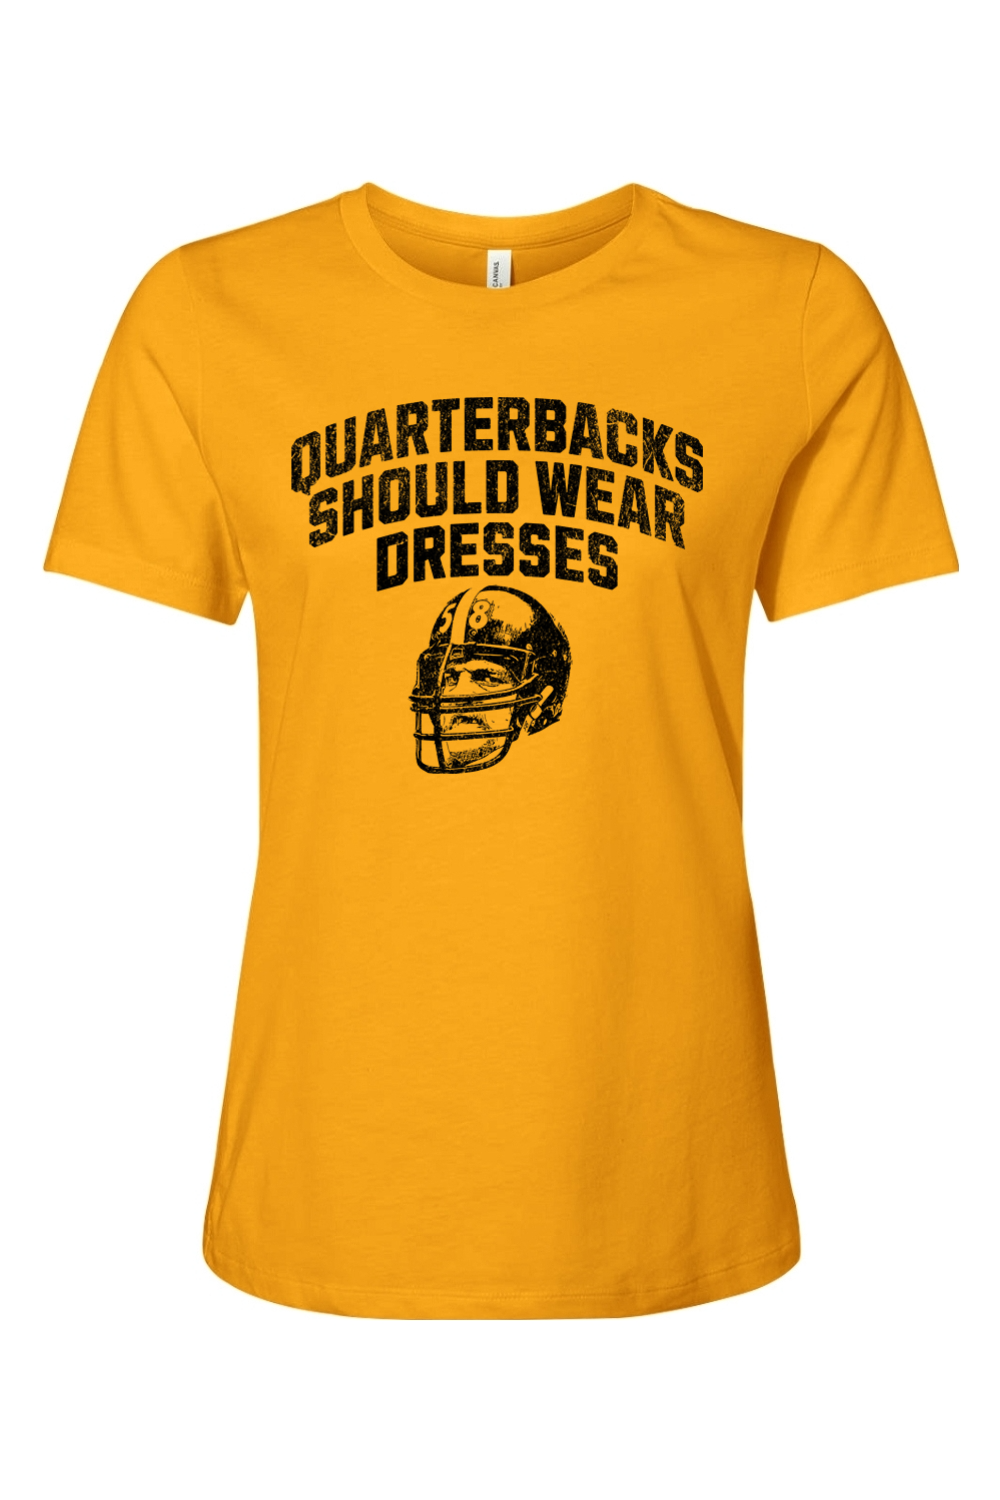 Quarterbacks Should Wear Dresses - Ladies Tee - Yinzylvania